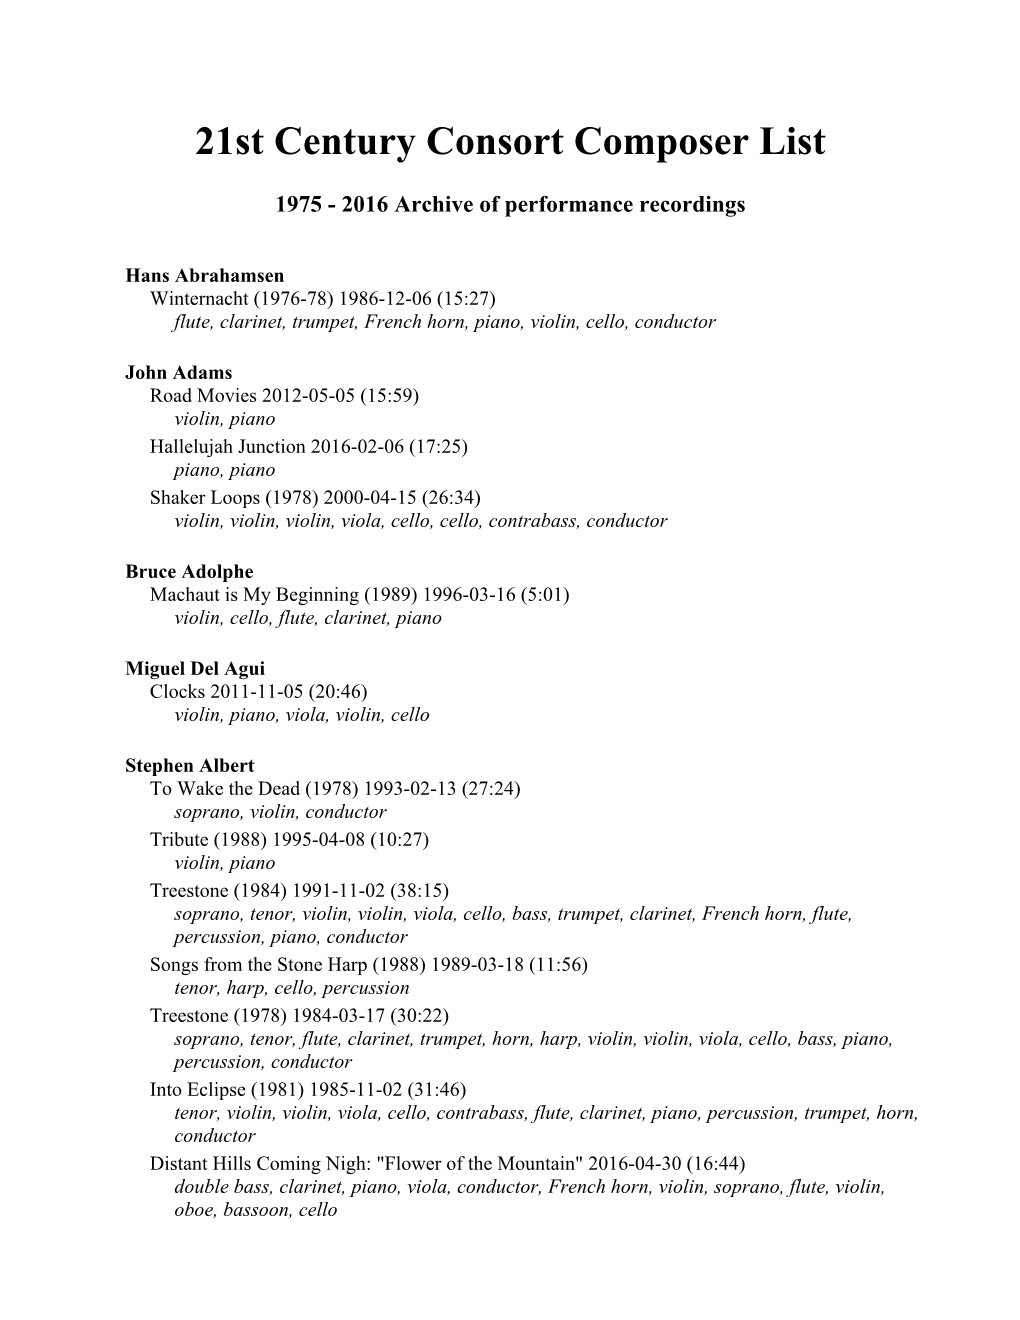 21St Century Consort Composer Performance List